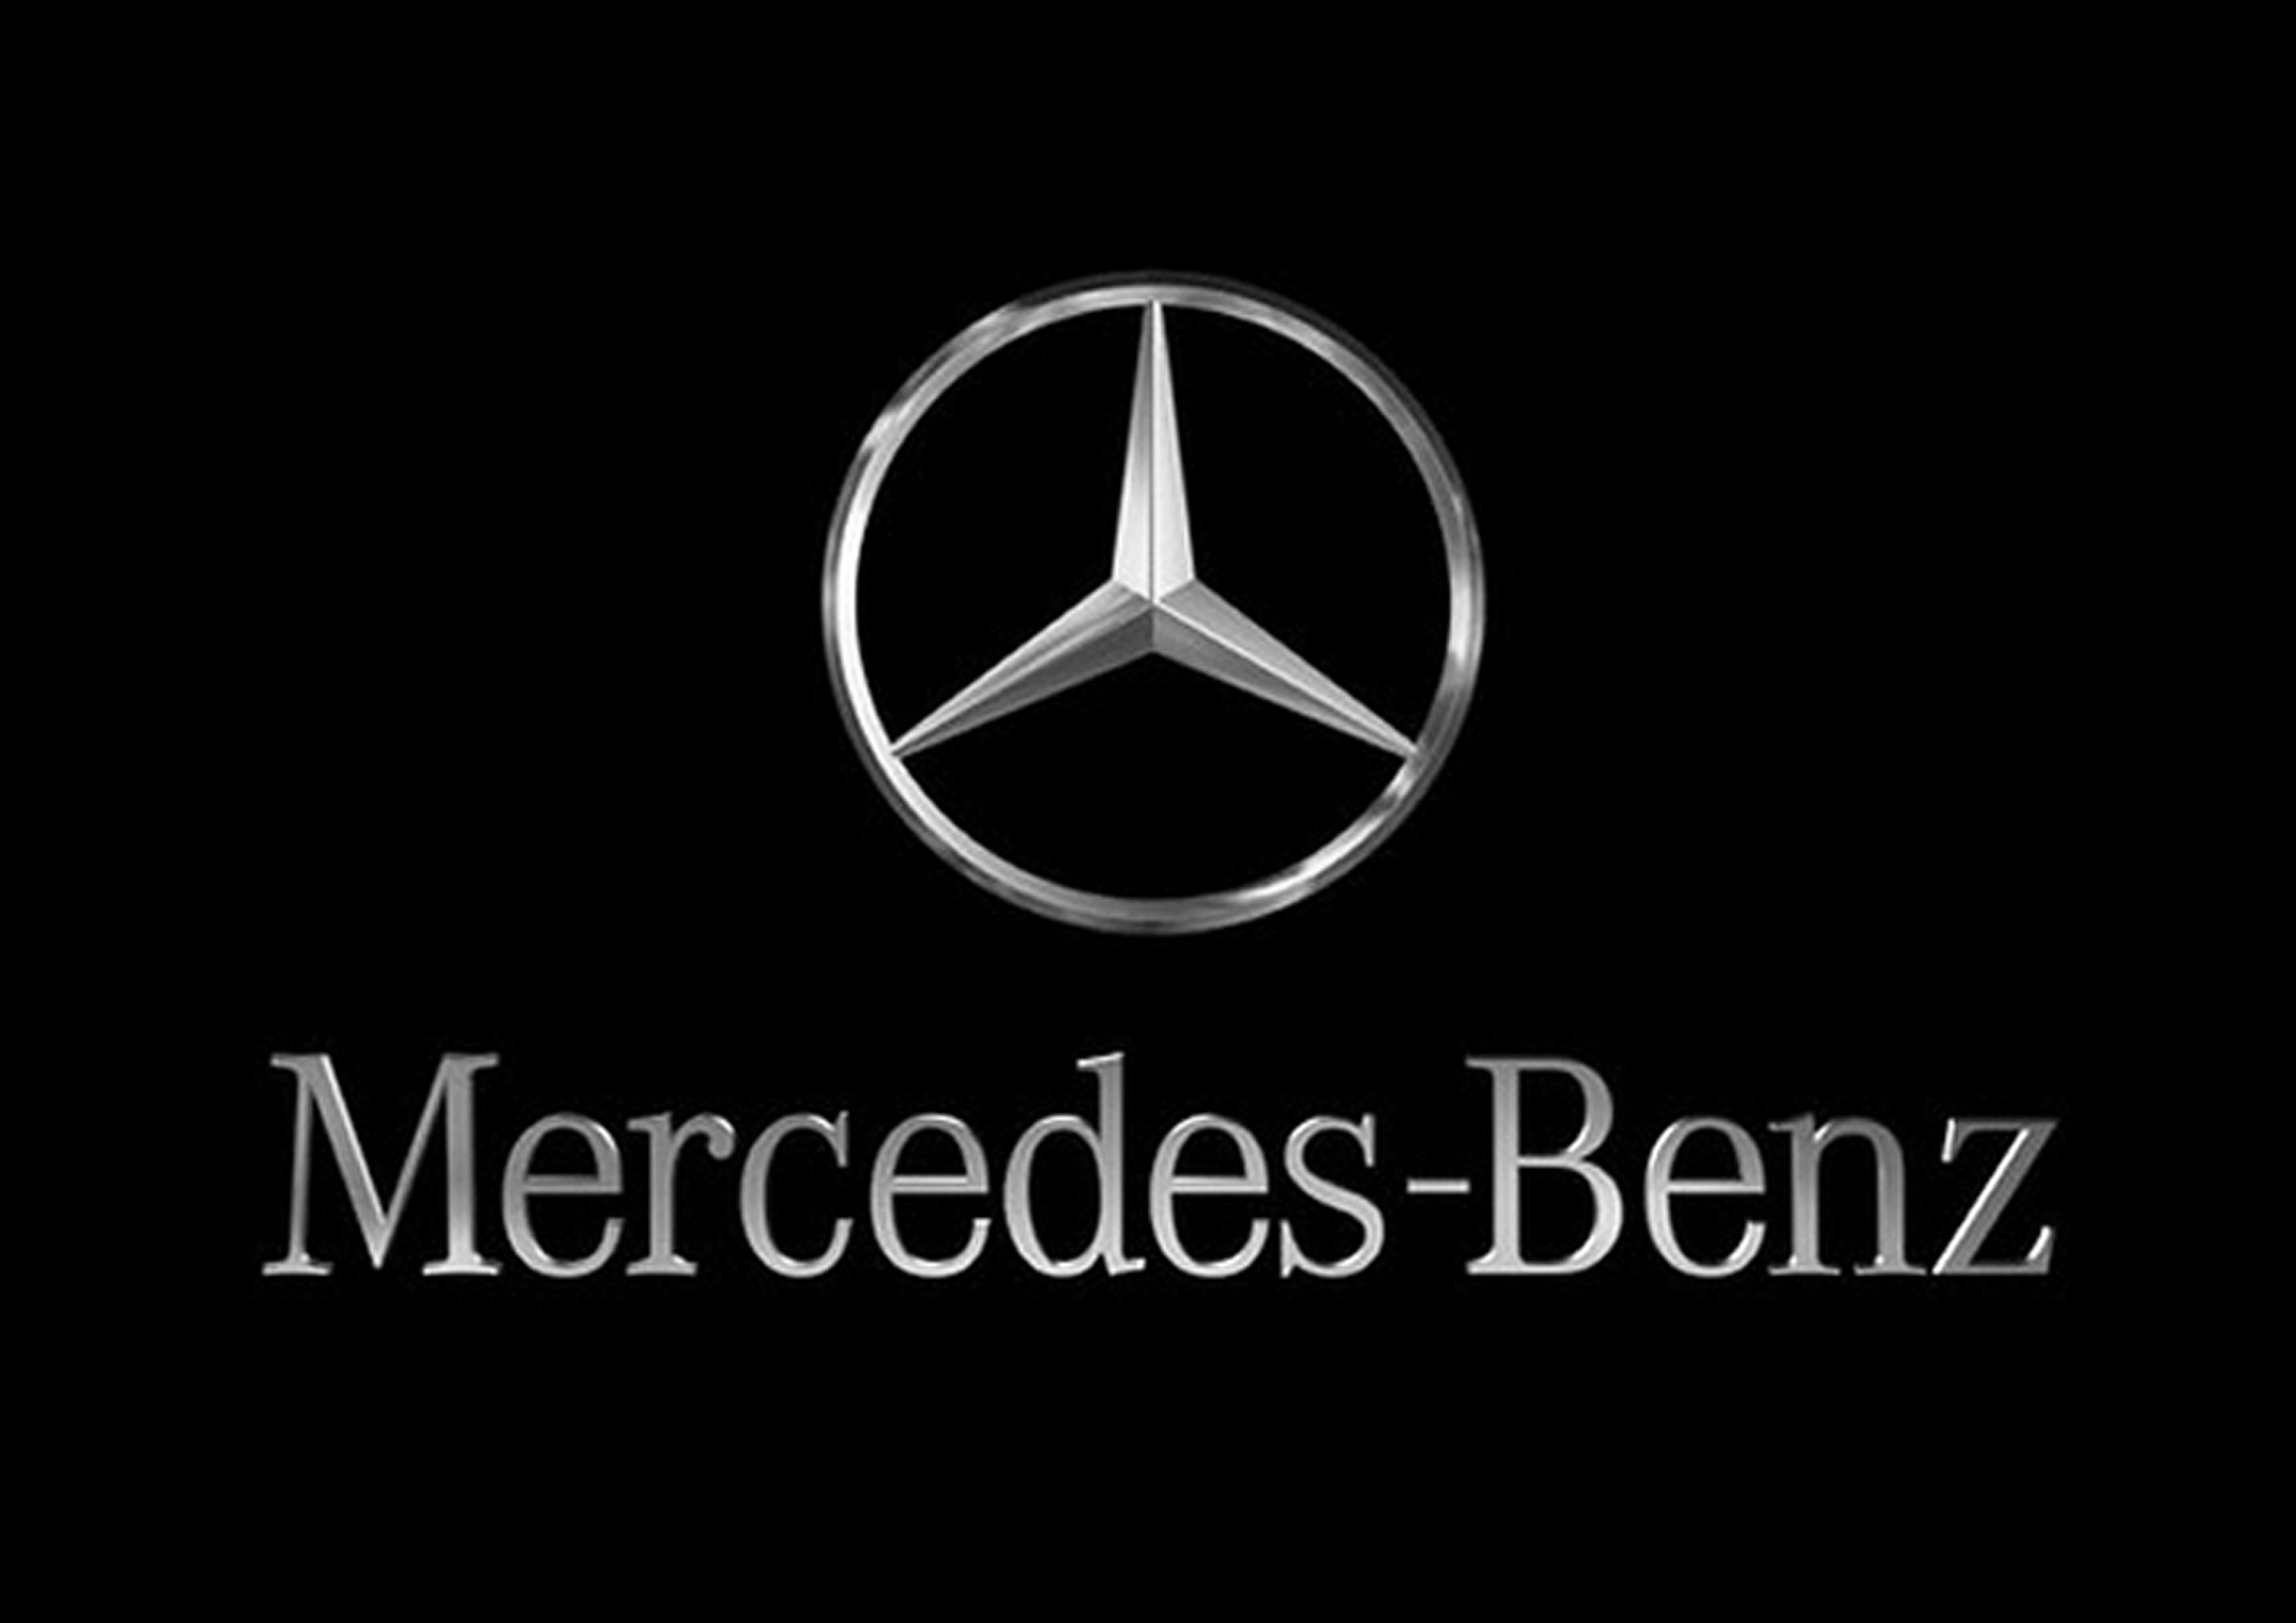 mercedes logo wallpaper – Popular Cars